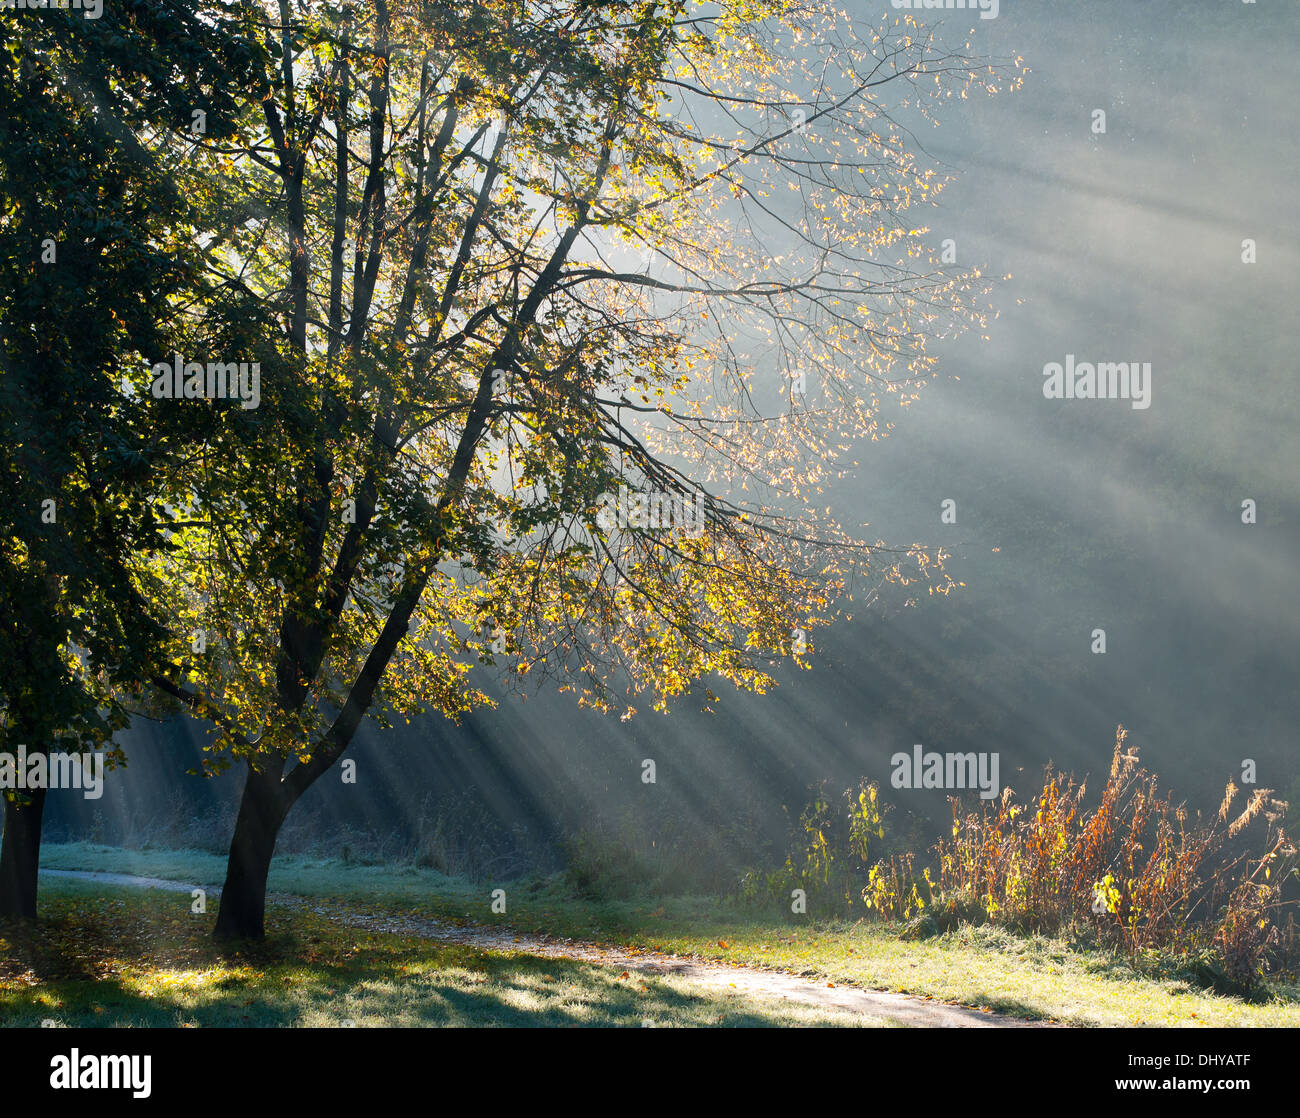 Sunlight shining through trees in mist Stock Photo